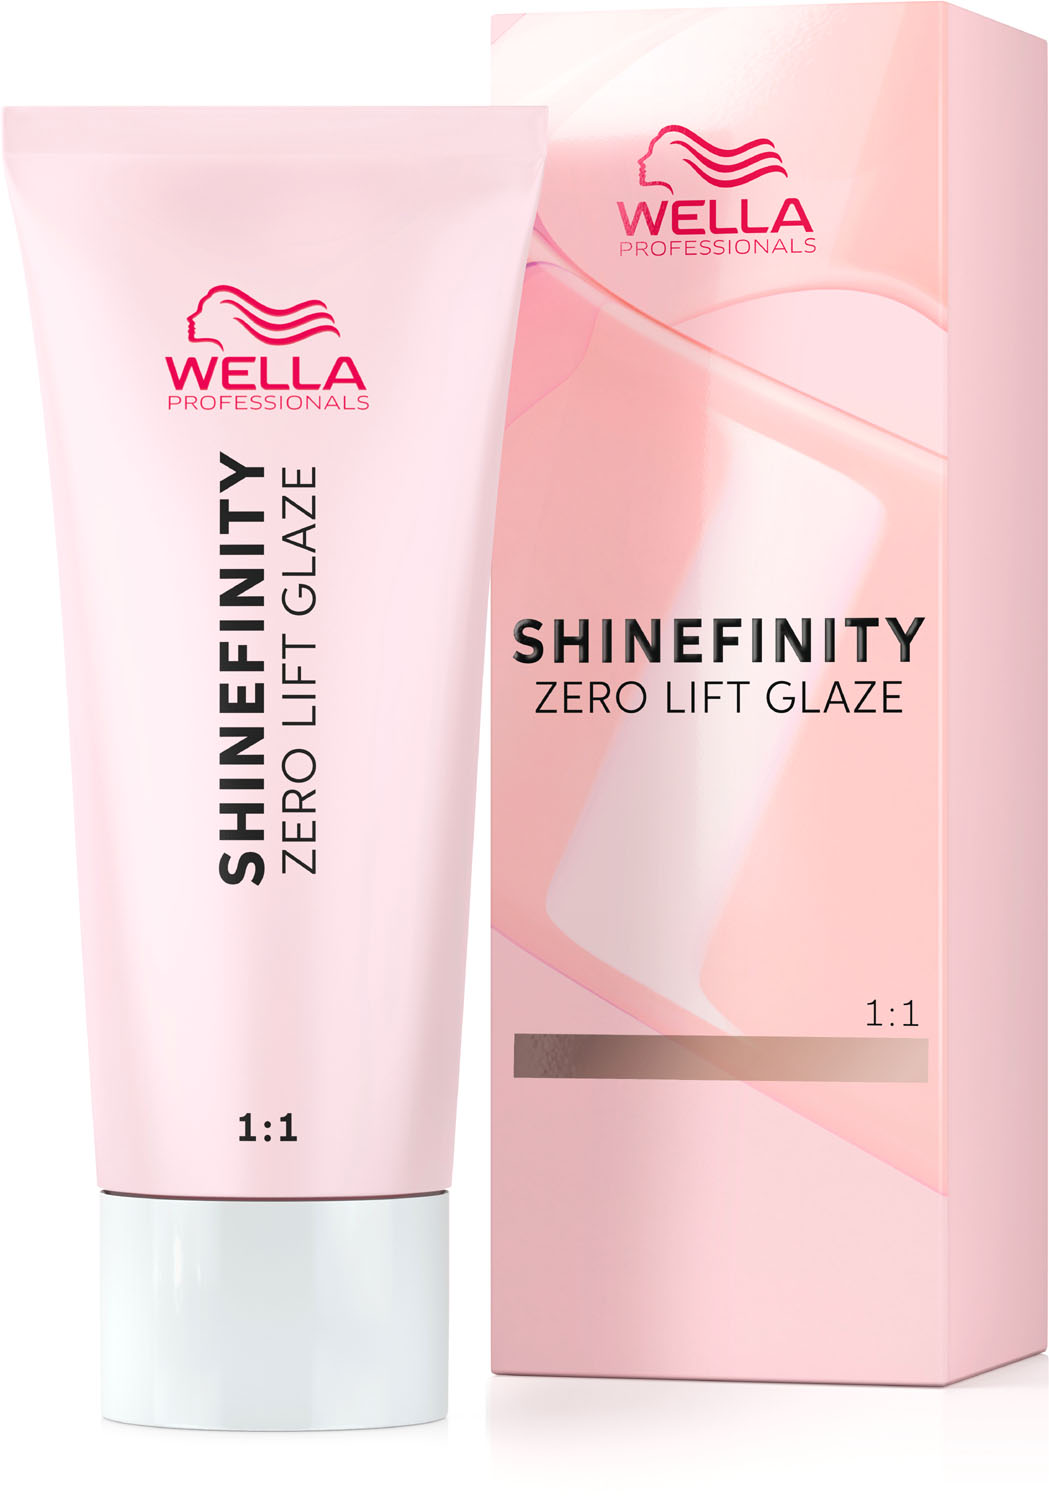  Wella Shinefinity Zero Lift Glazes 04/0 Natural Espresso 